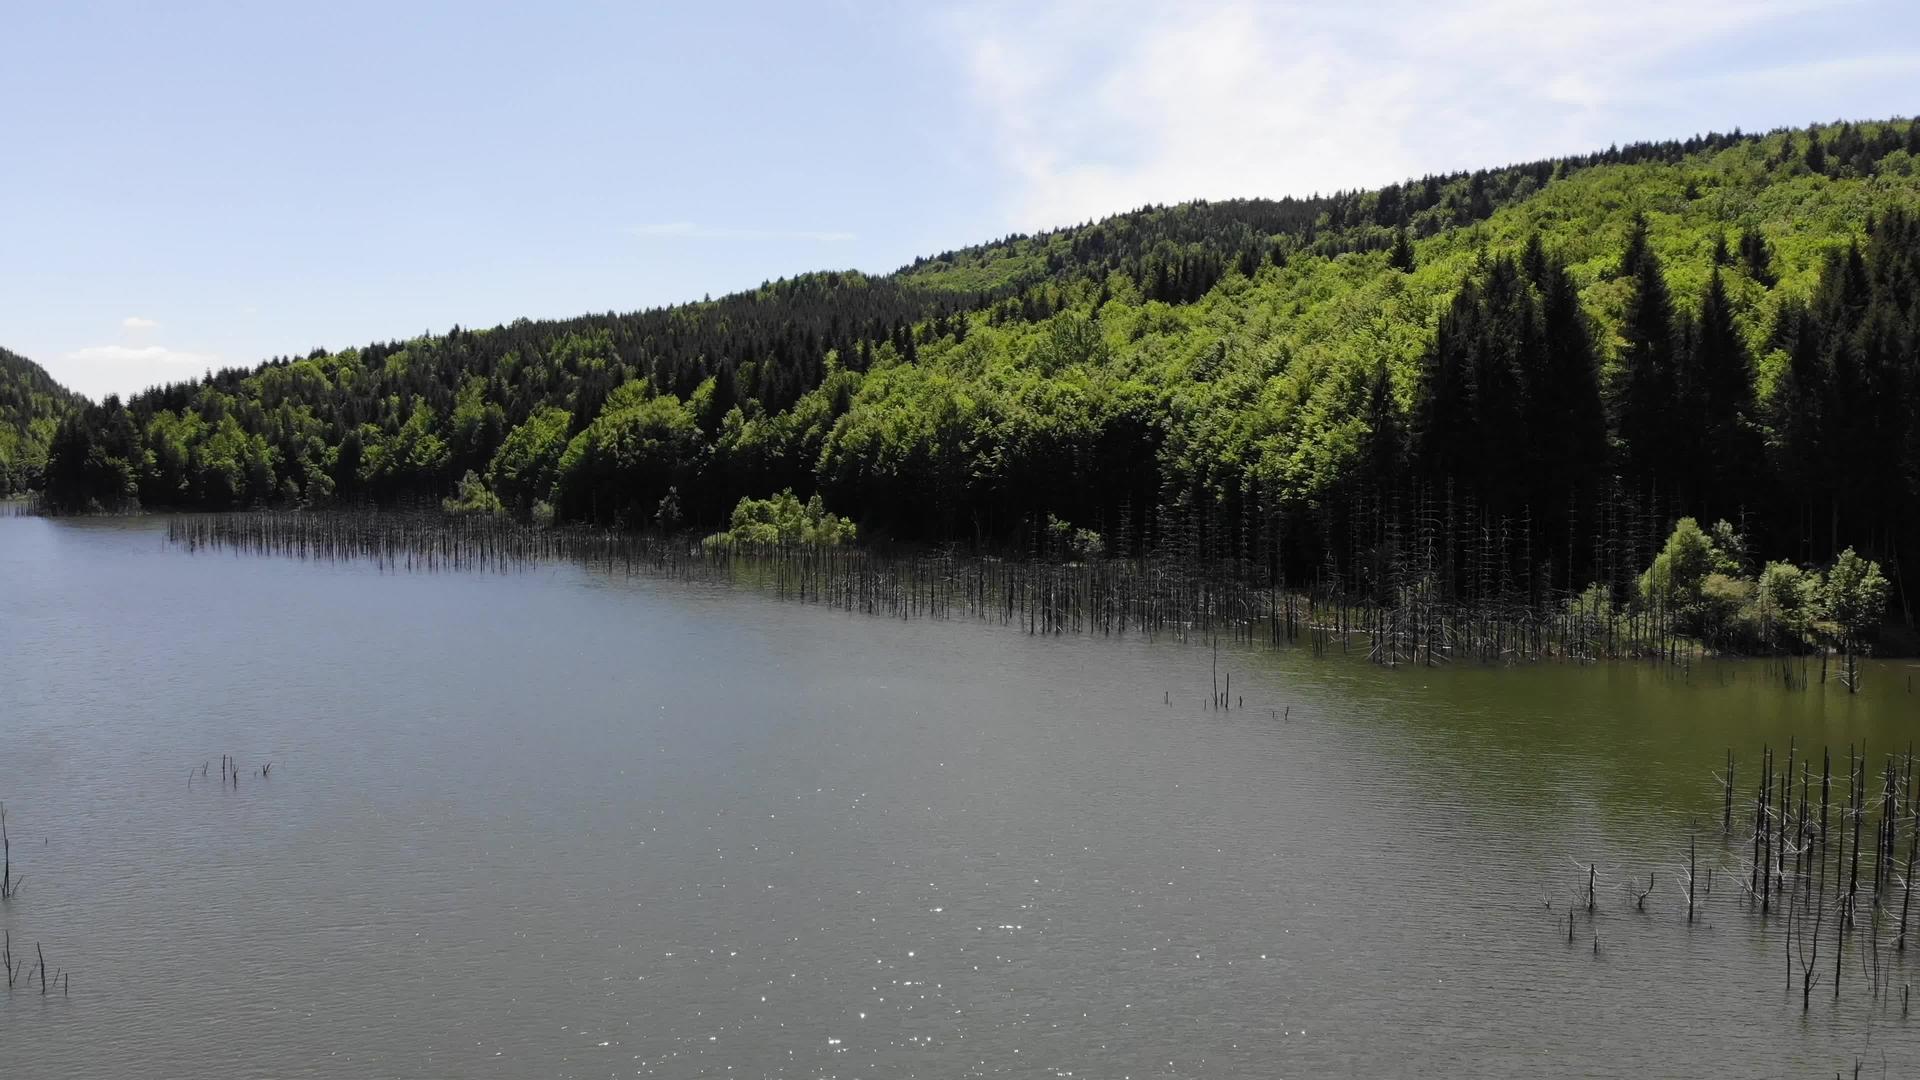 Cuejdel这个湖出生于30年前在河上坠落今天是欧洲视频的预览图